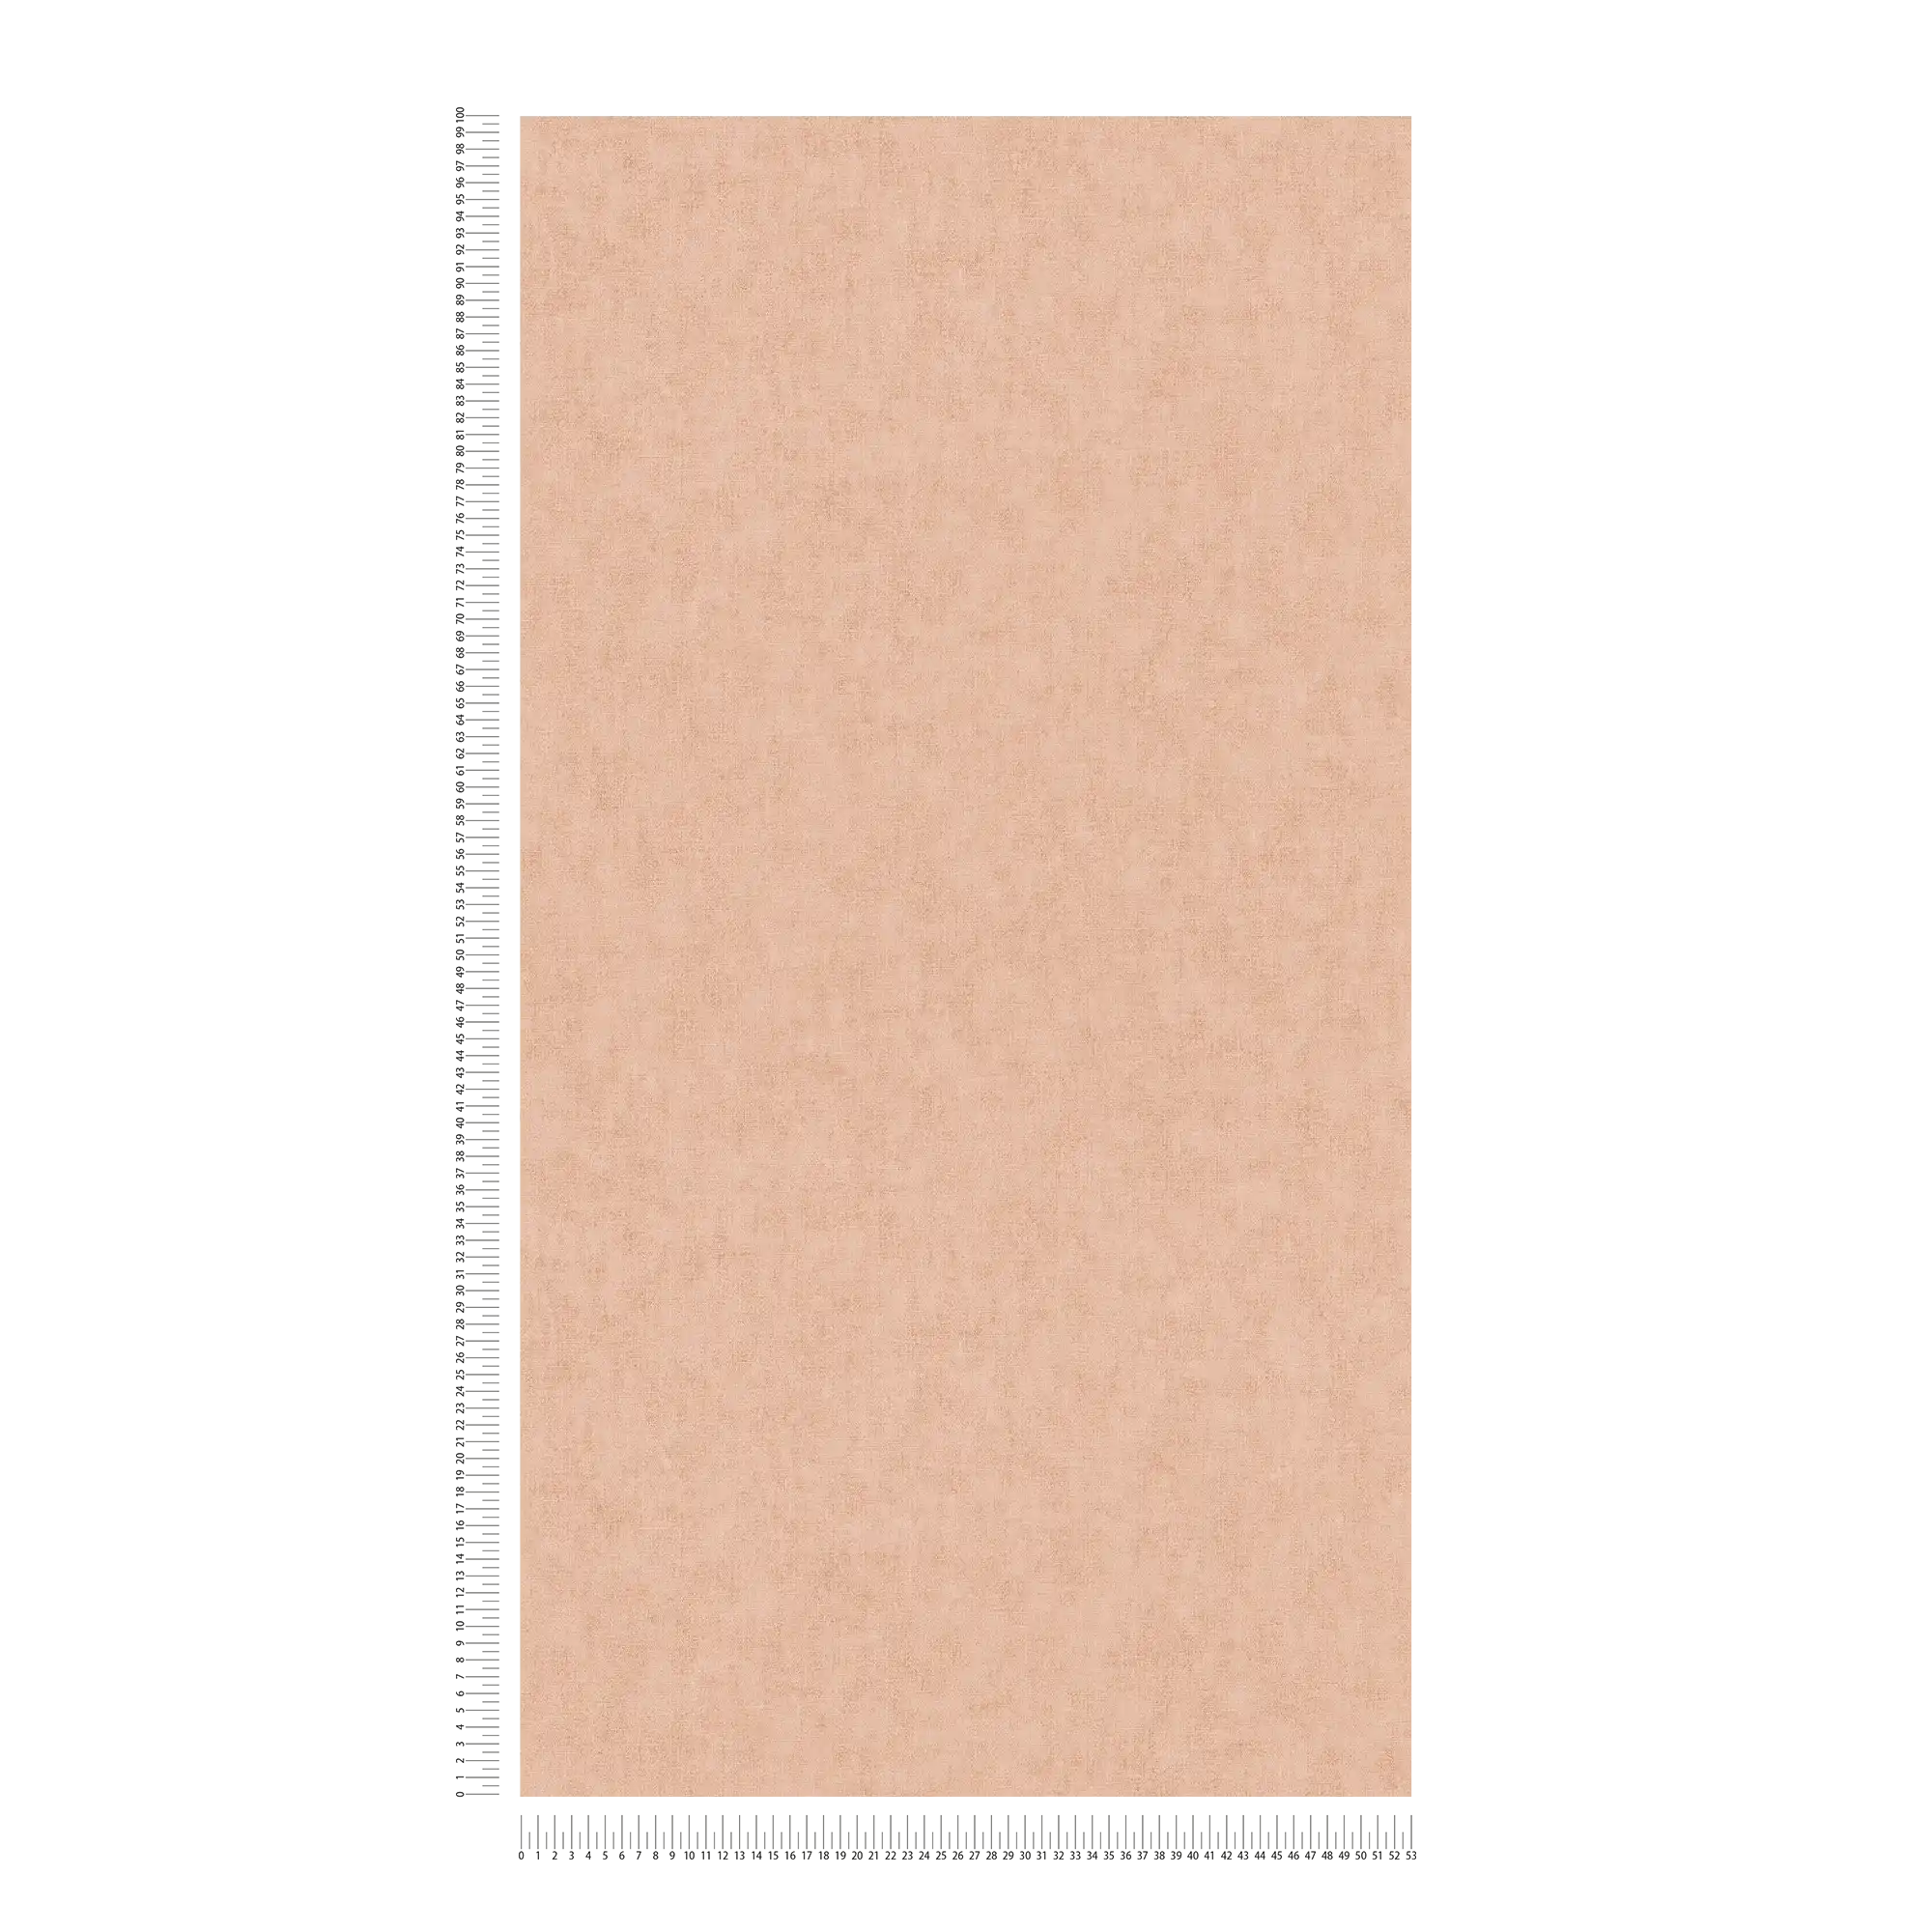             Papier peint uni, aspect lin & style scandinave - rose, orange
        